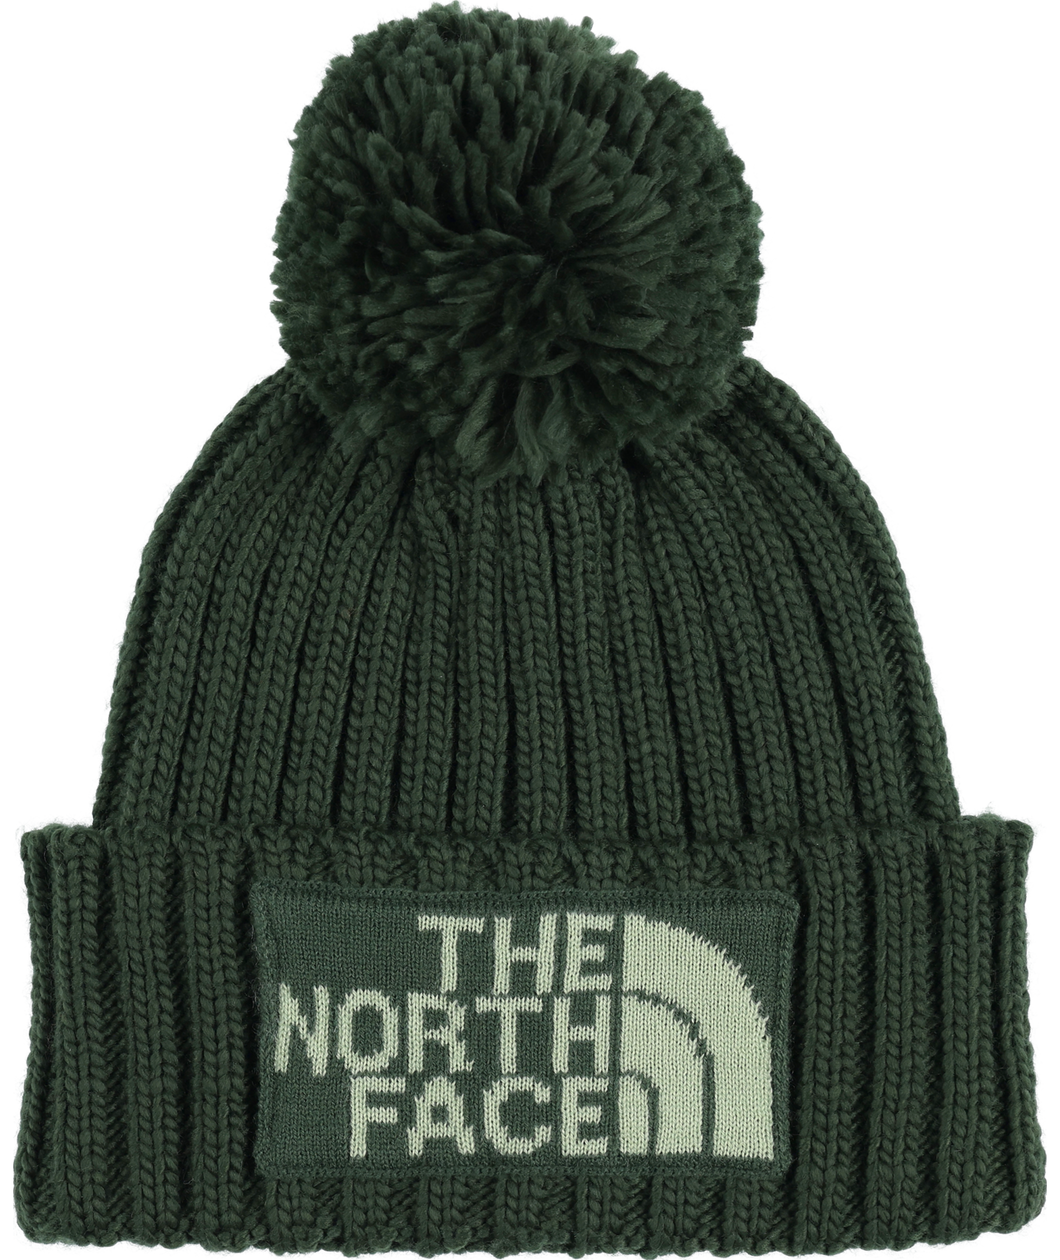 The North Face Heritage Ski Tuke